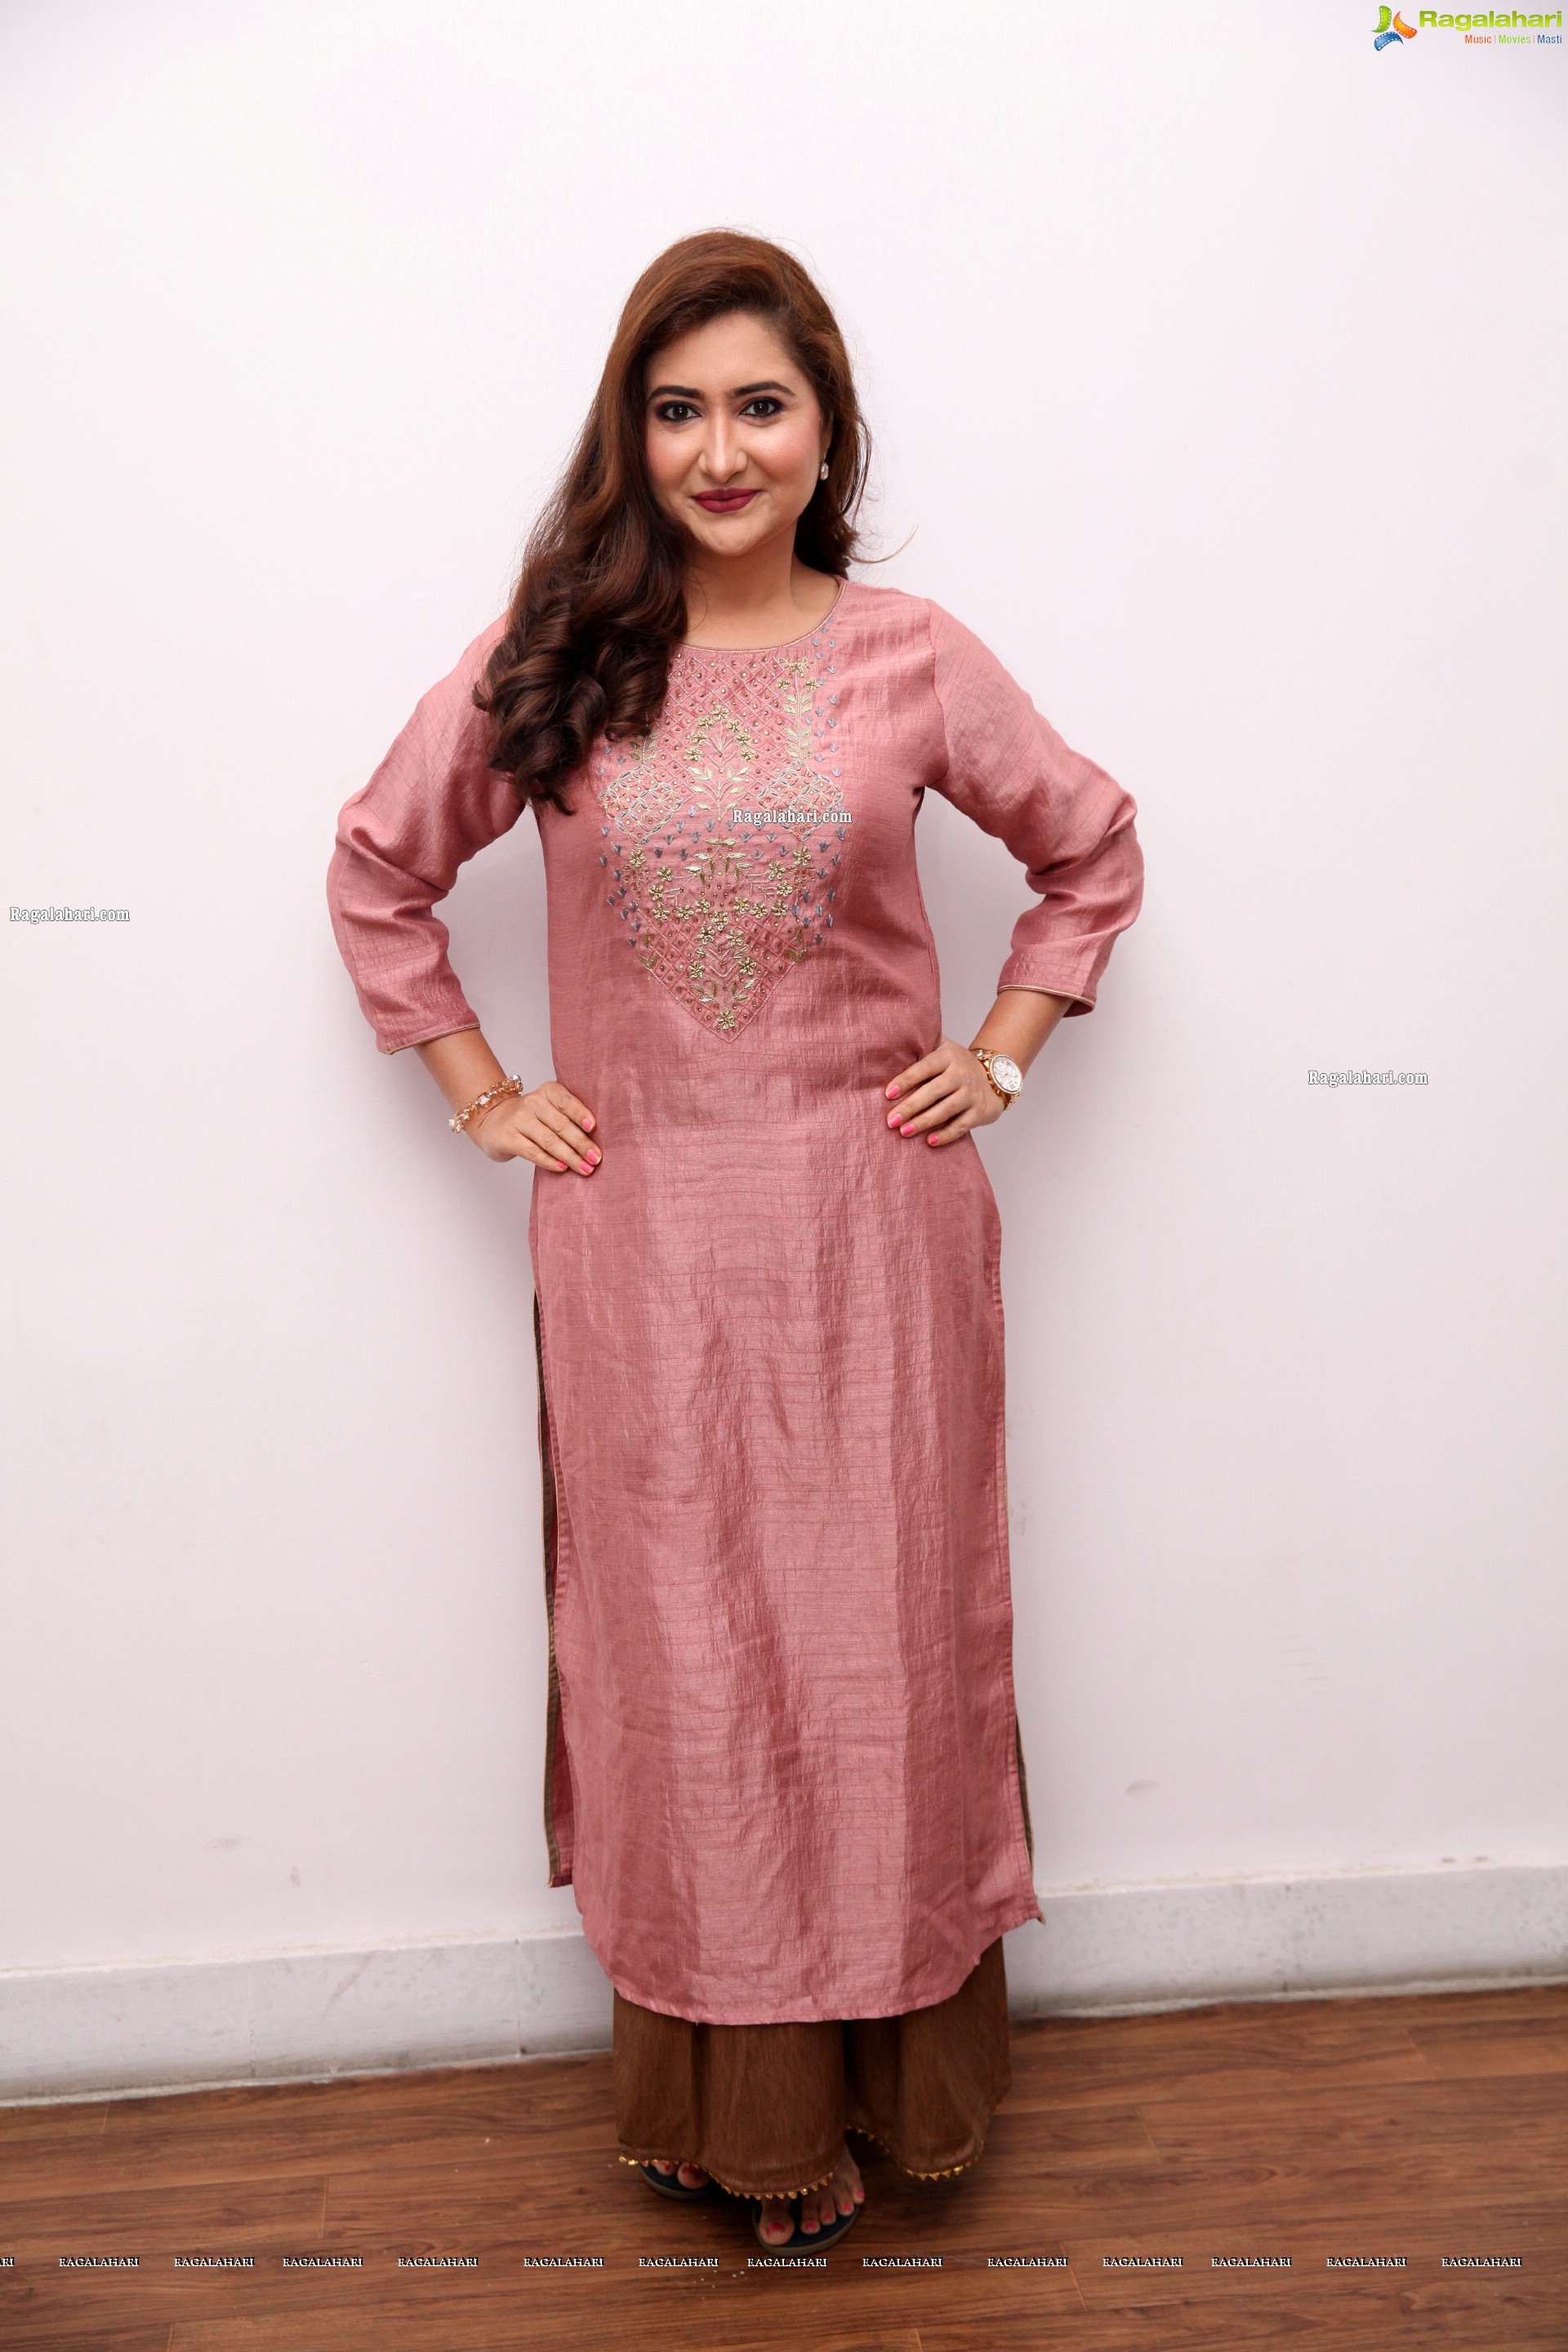 Harshada Patil in Pink Embellished Kurta, HD Photo Gallery